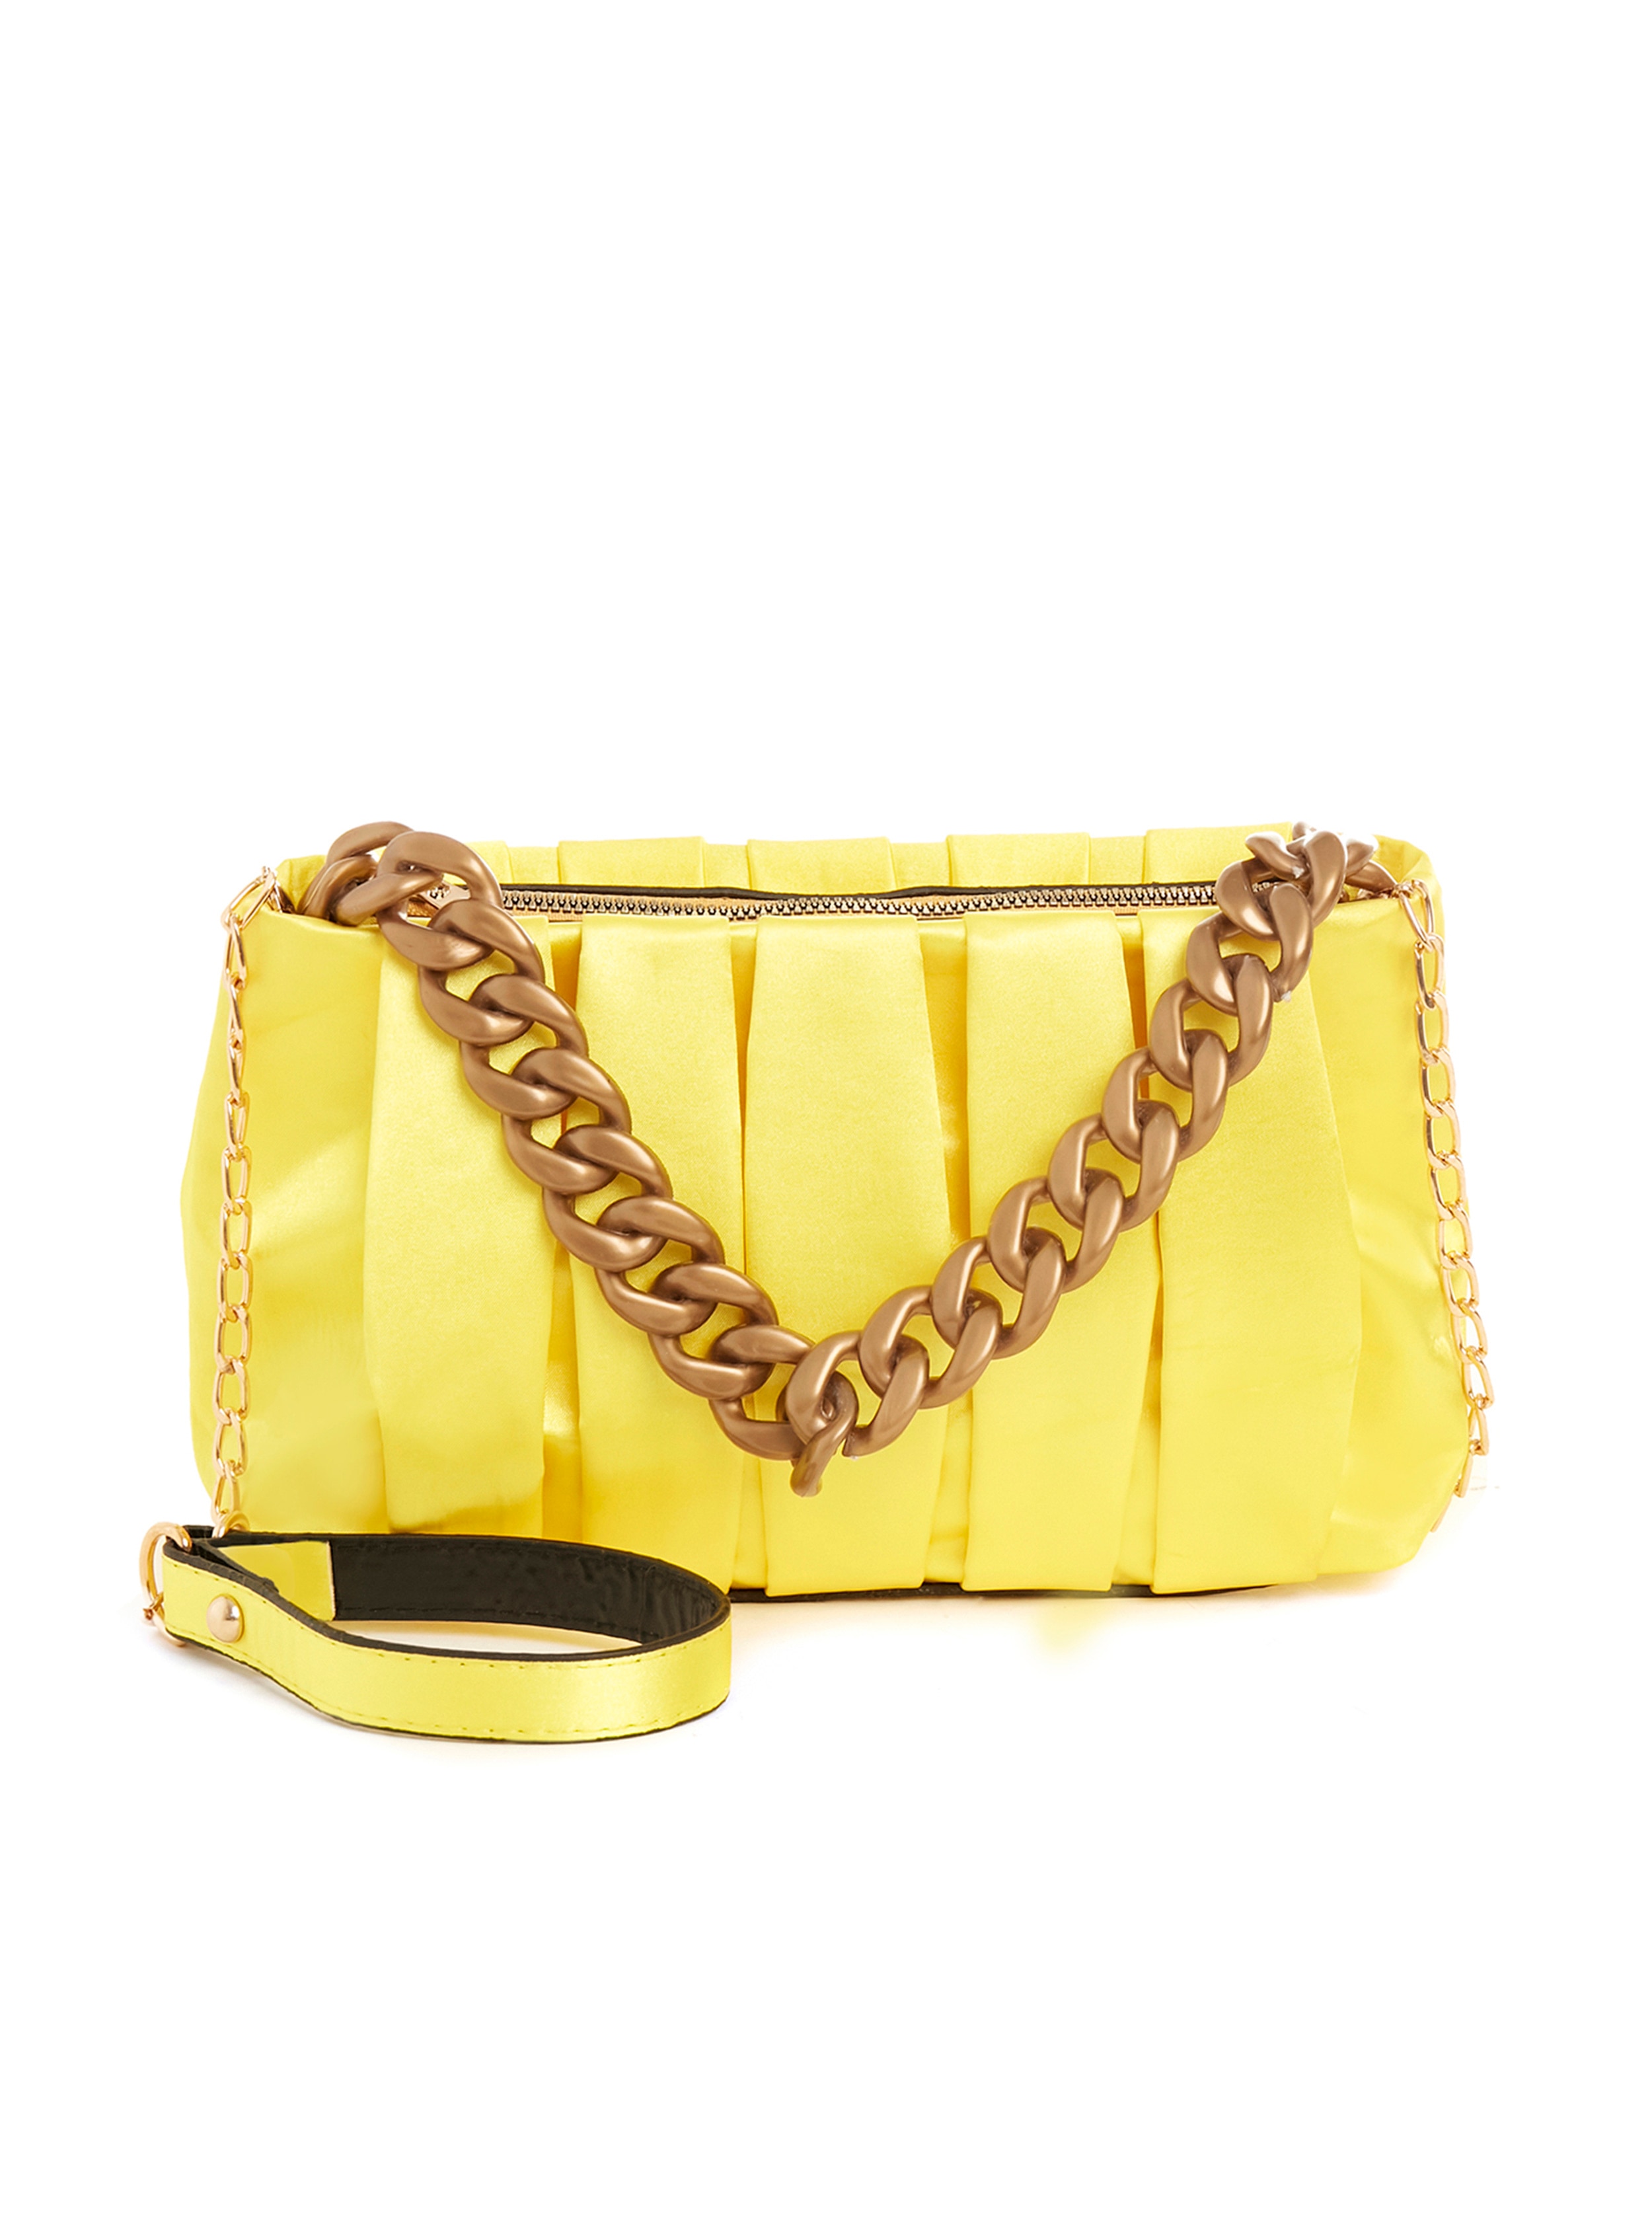 Crossbody - Yellow - Cross Bag